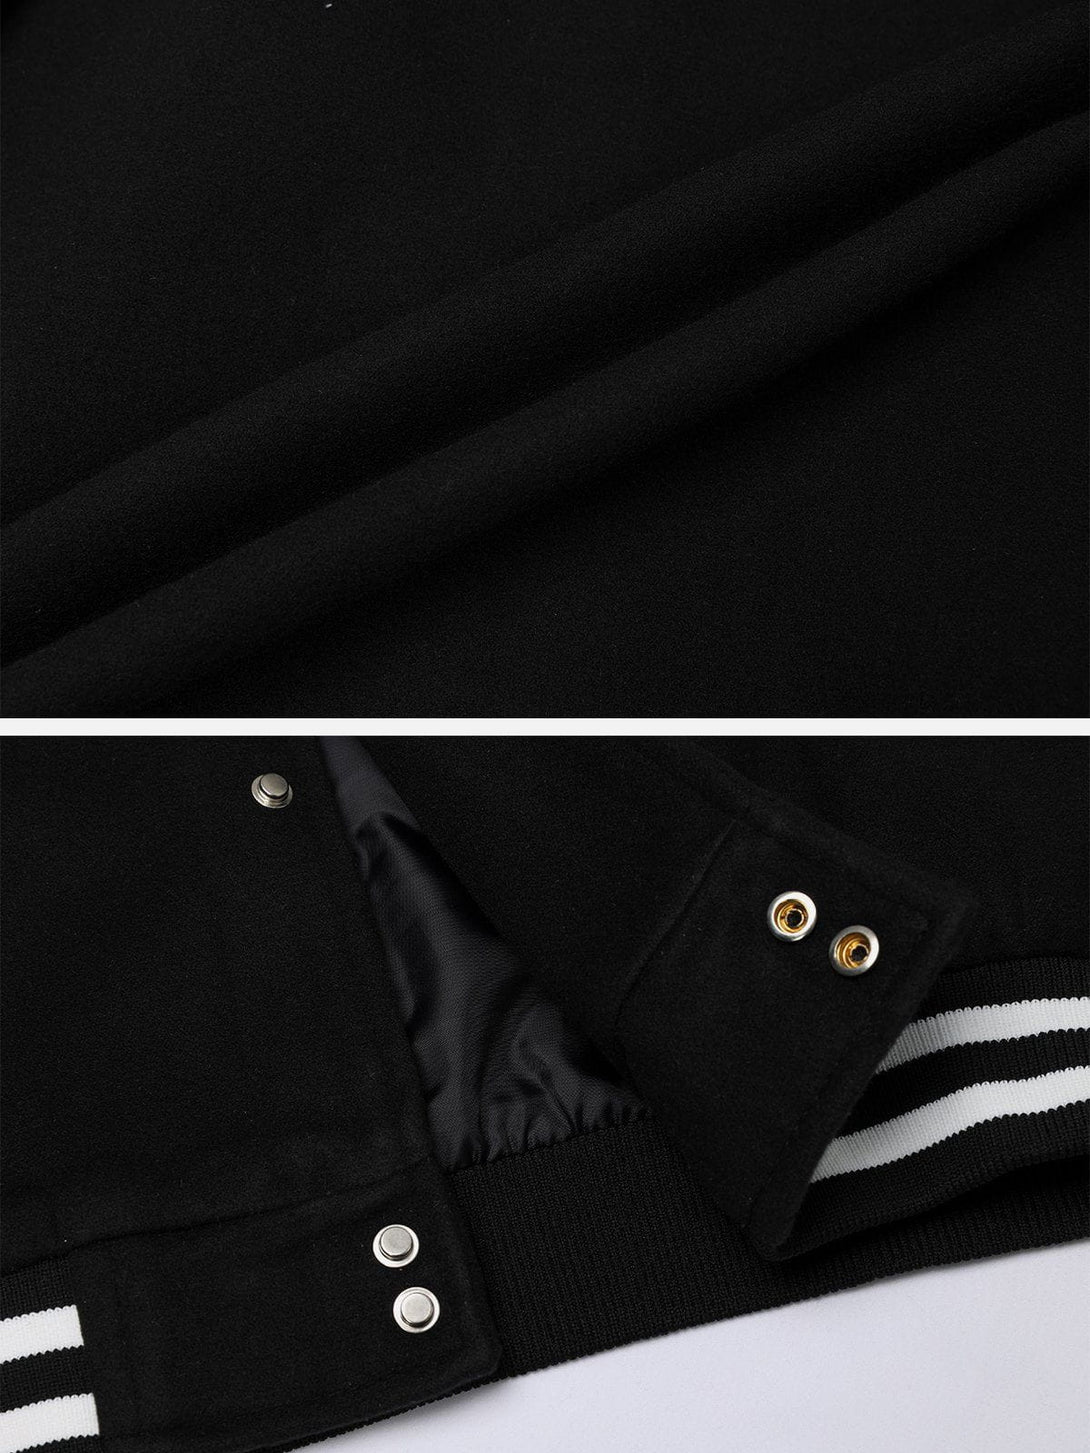 Majesda® - Patchwork Large Letters Print Jacket outfit ideas, streetwear fashion - majesda.com